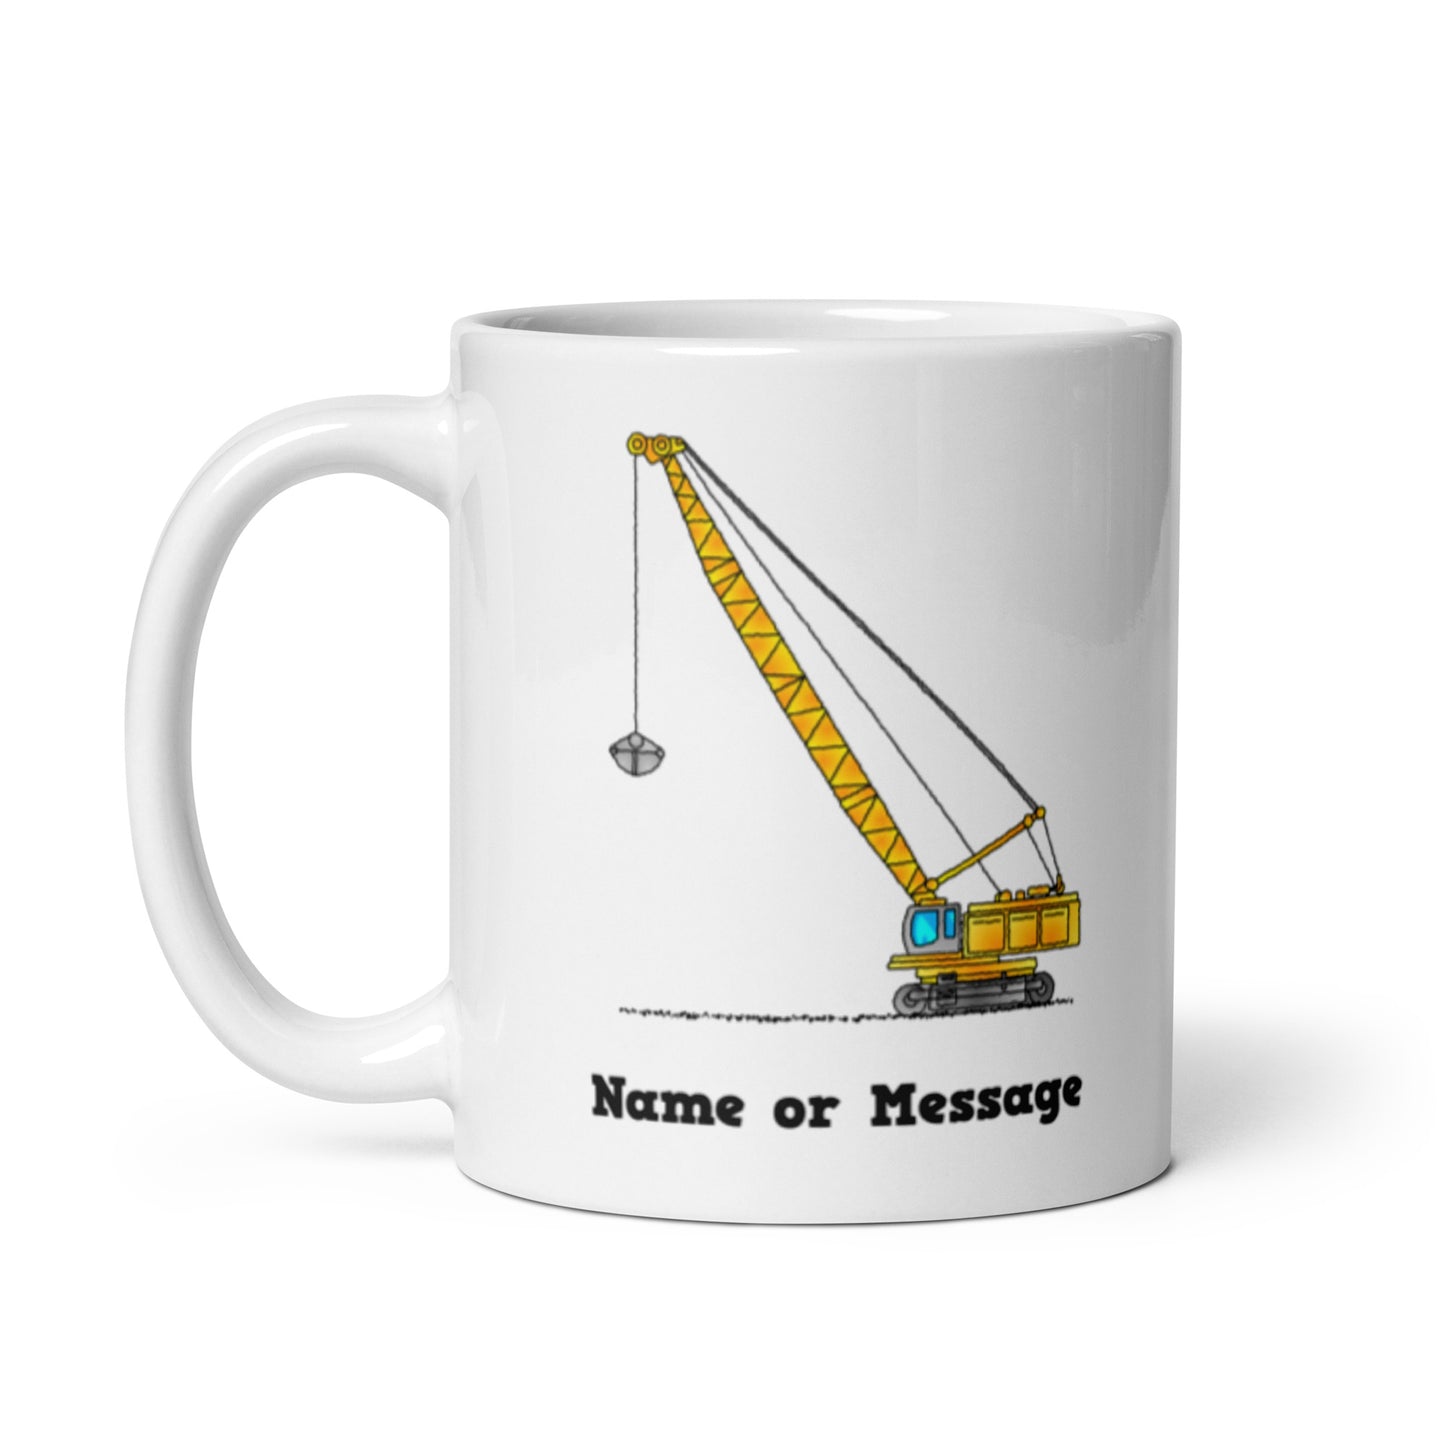 Personalized Crane Mug